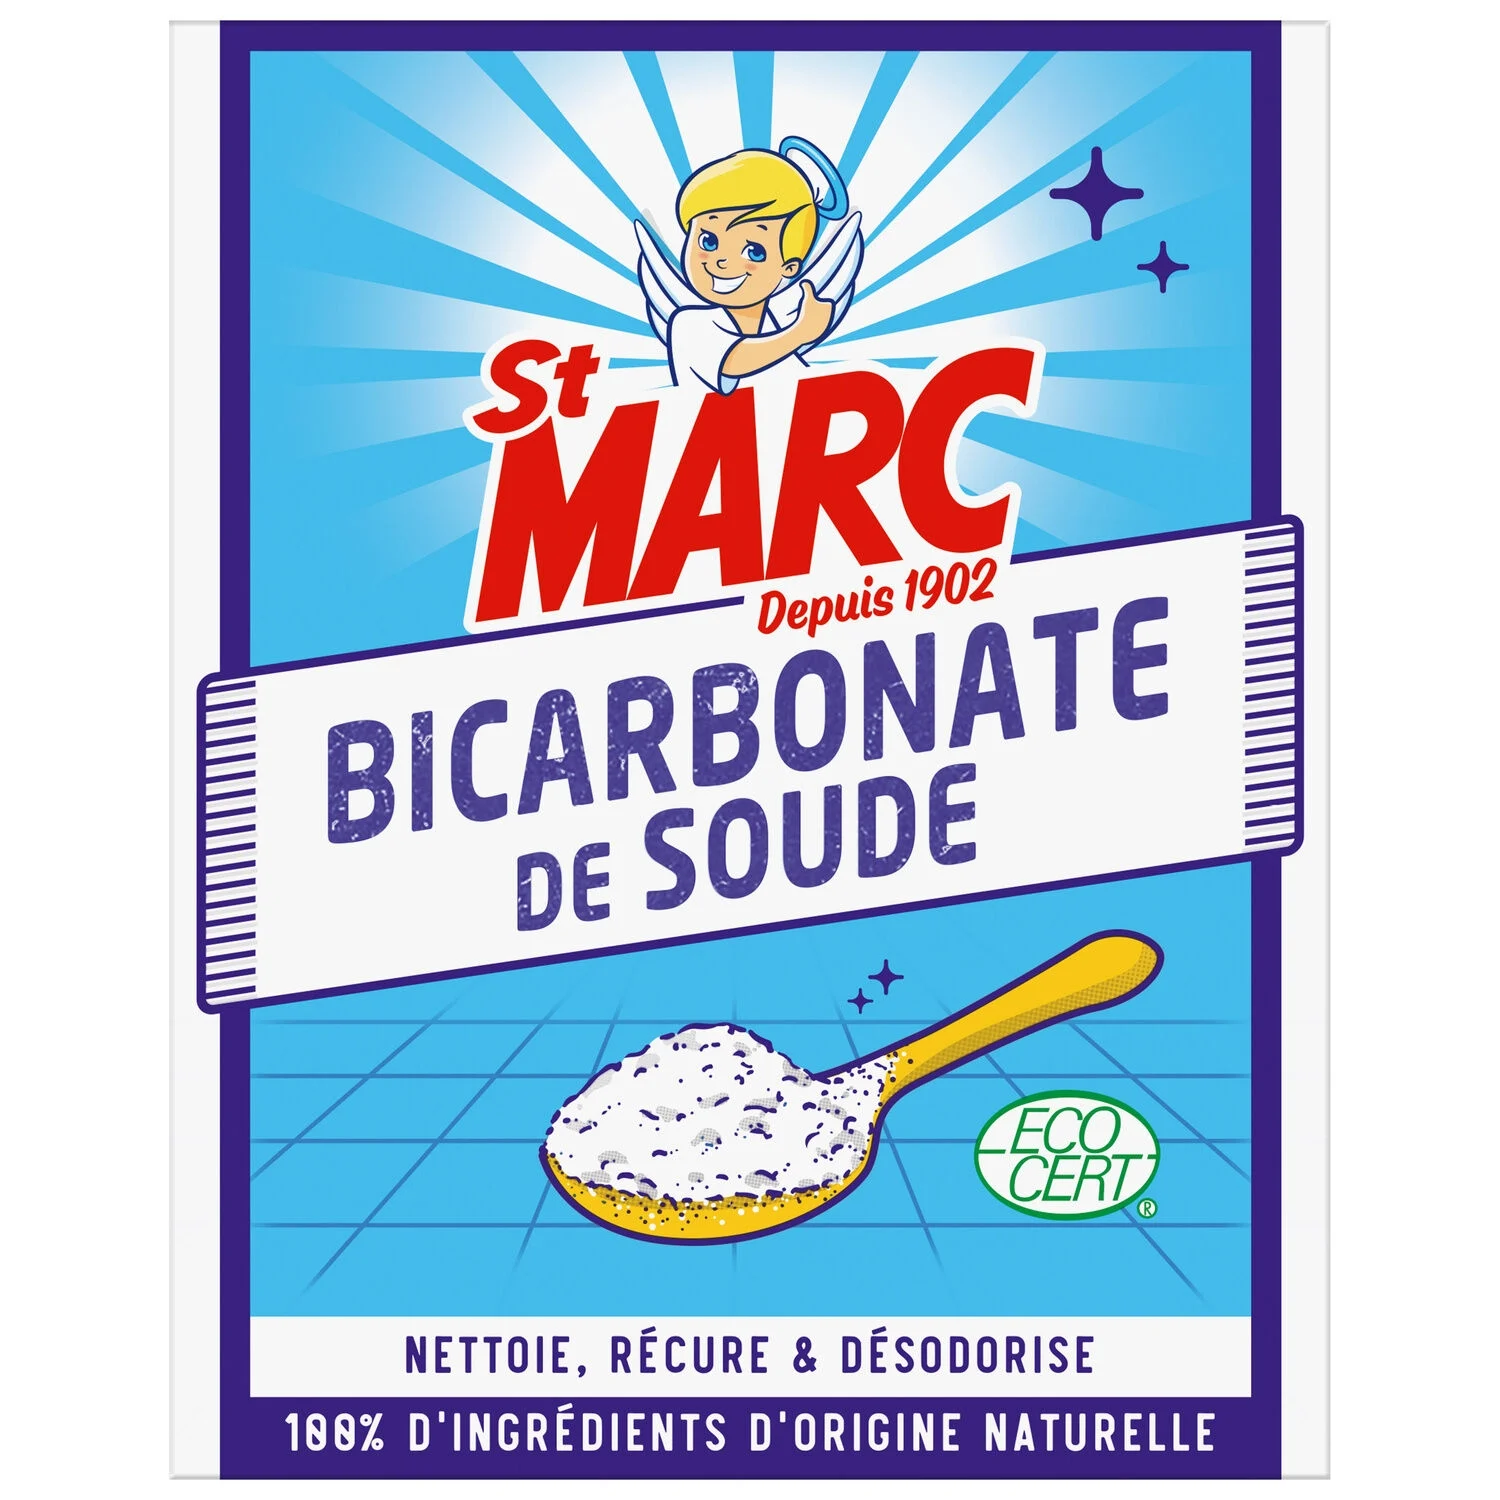 680g Bicarbonate Soude St Marc